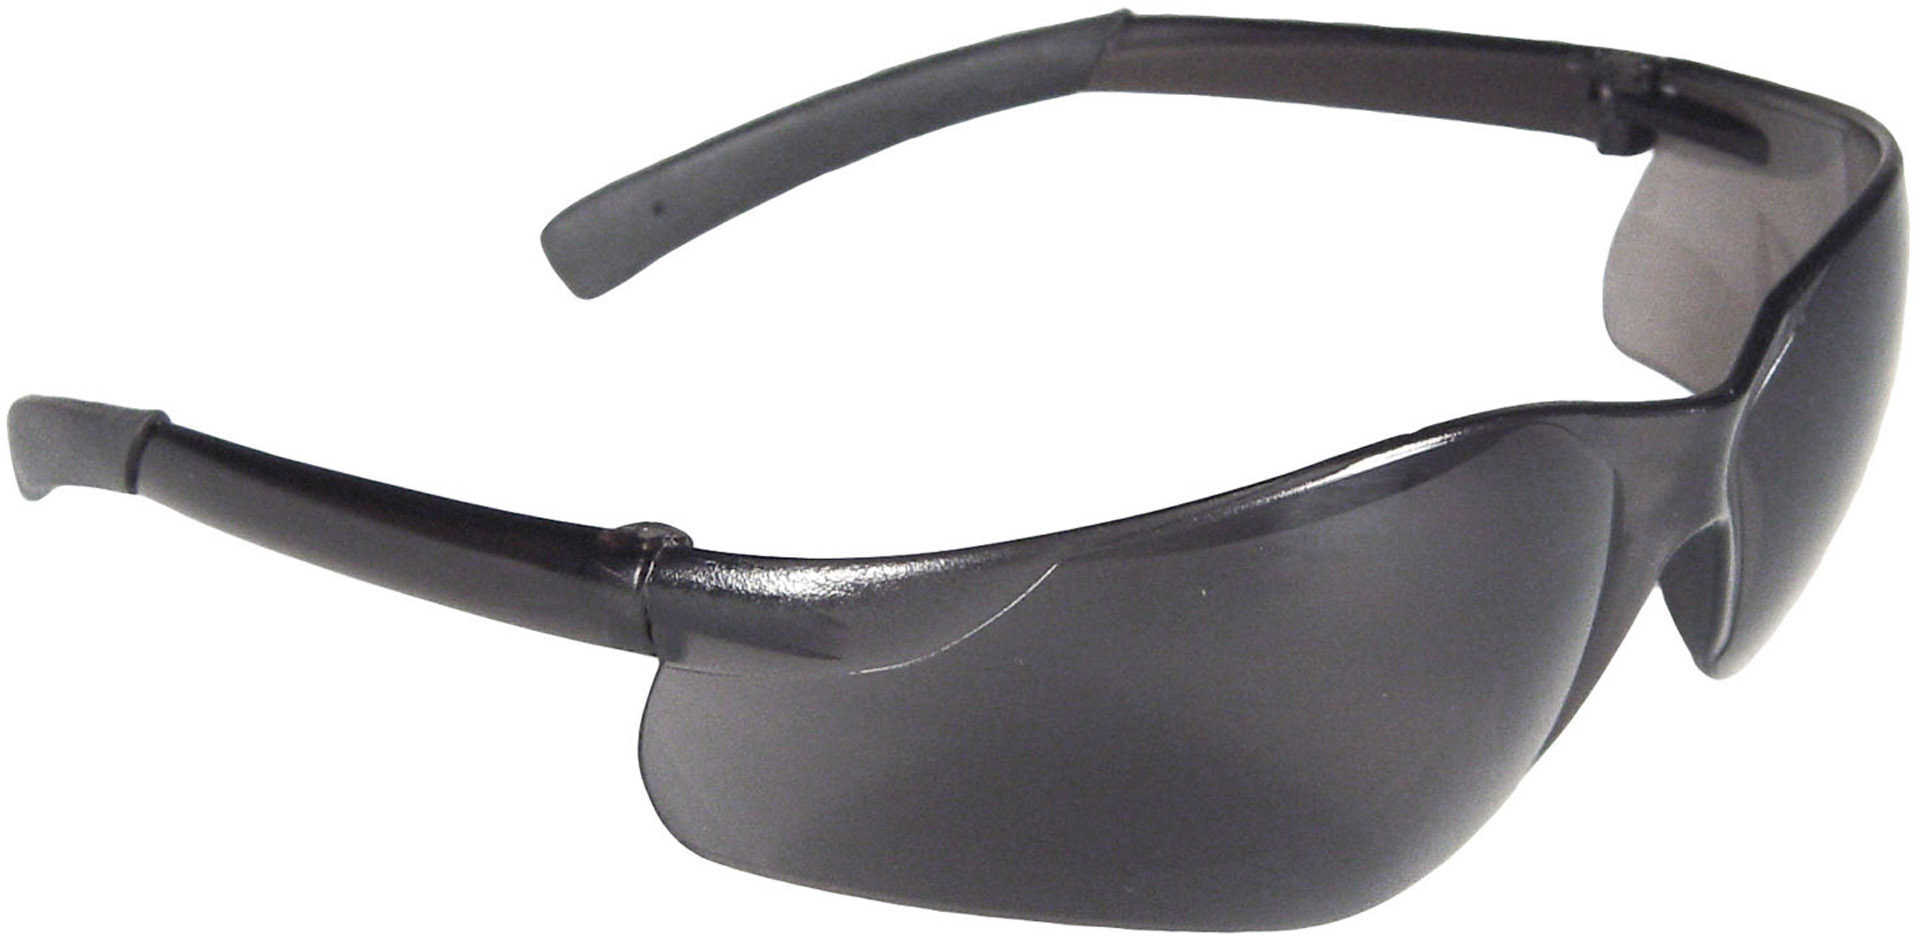 Hunter Shooting Glasses Smoke Lens Rubber Tipped temples - Lightweight Popular Design Meets Ansi Z87.1+ standards B